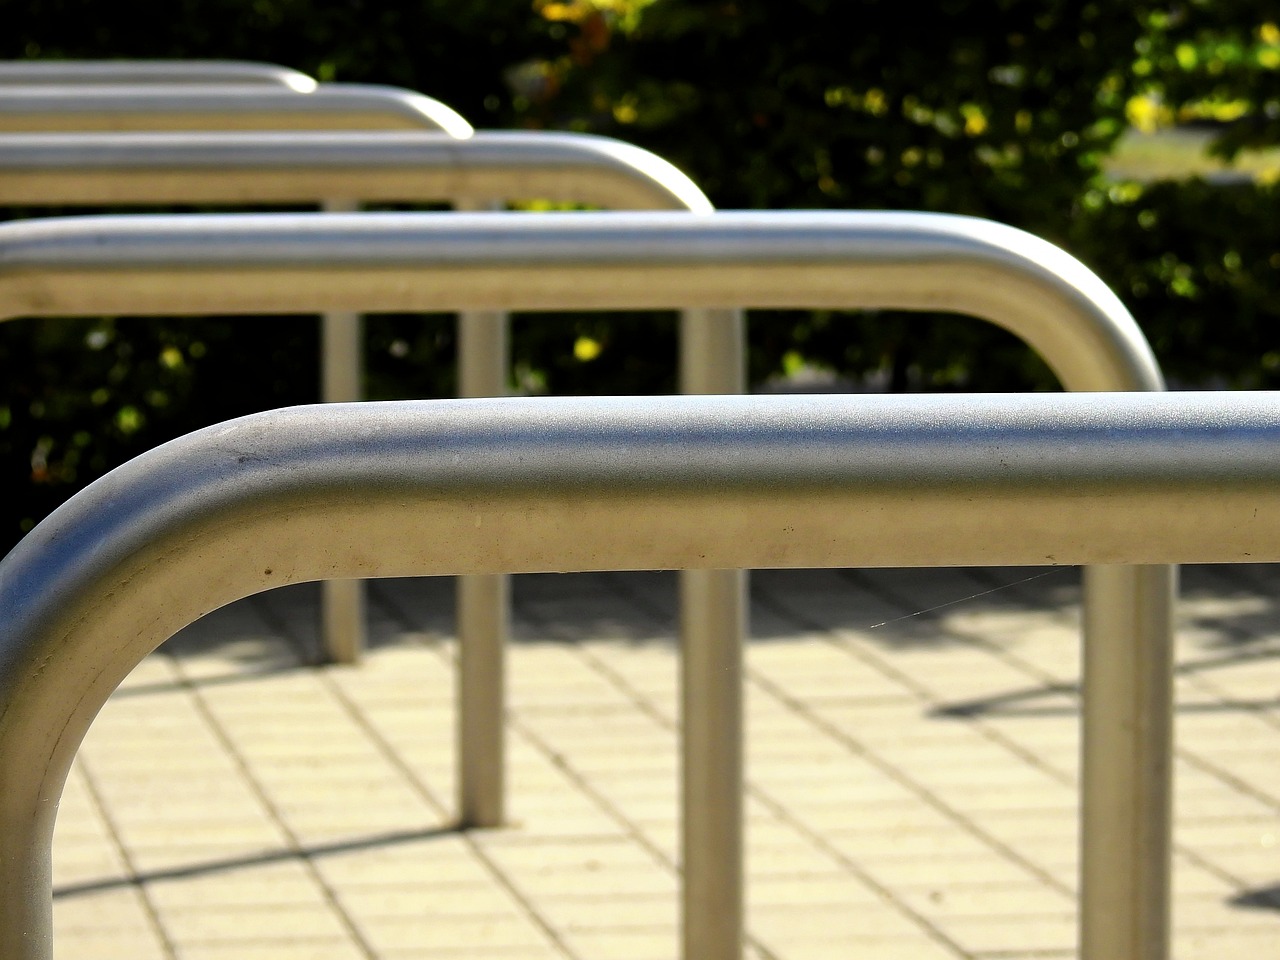 Five unpainted metal tube designed for public bike parking